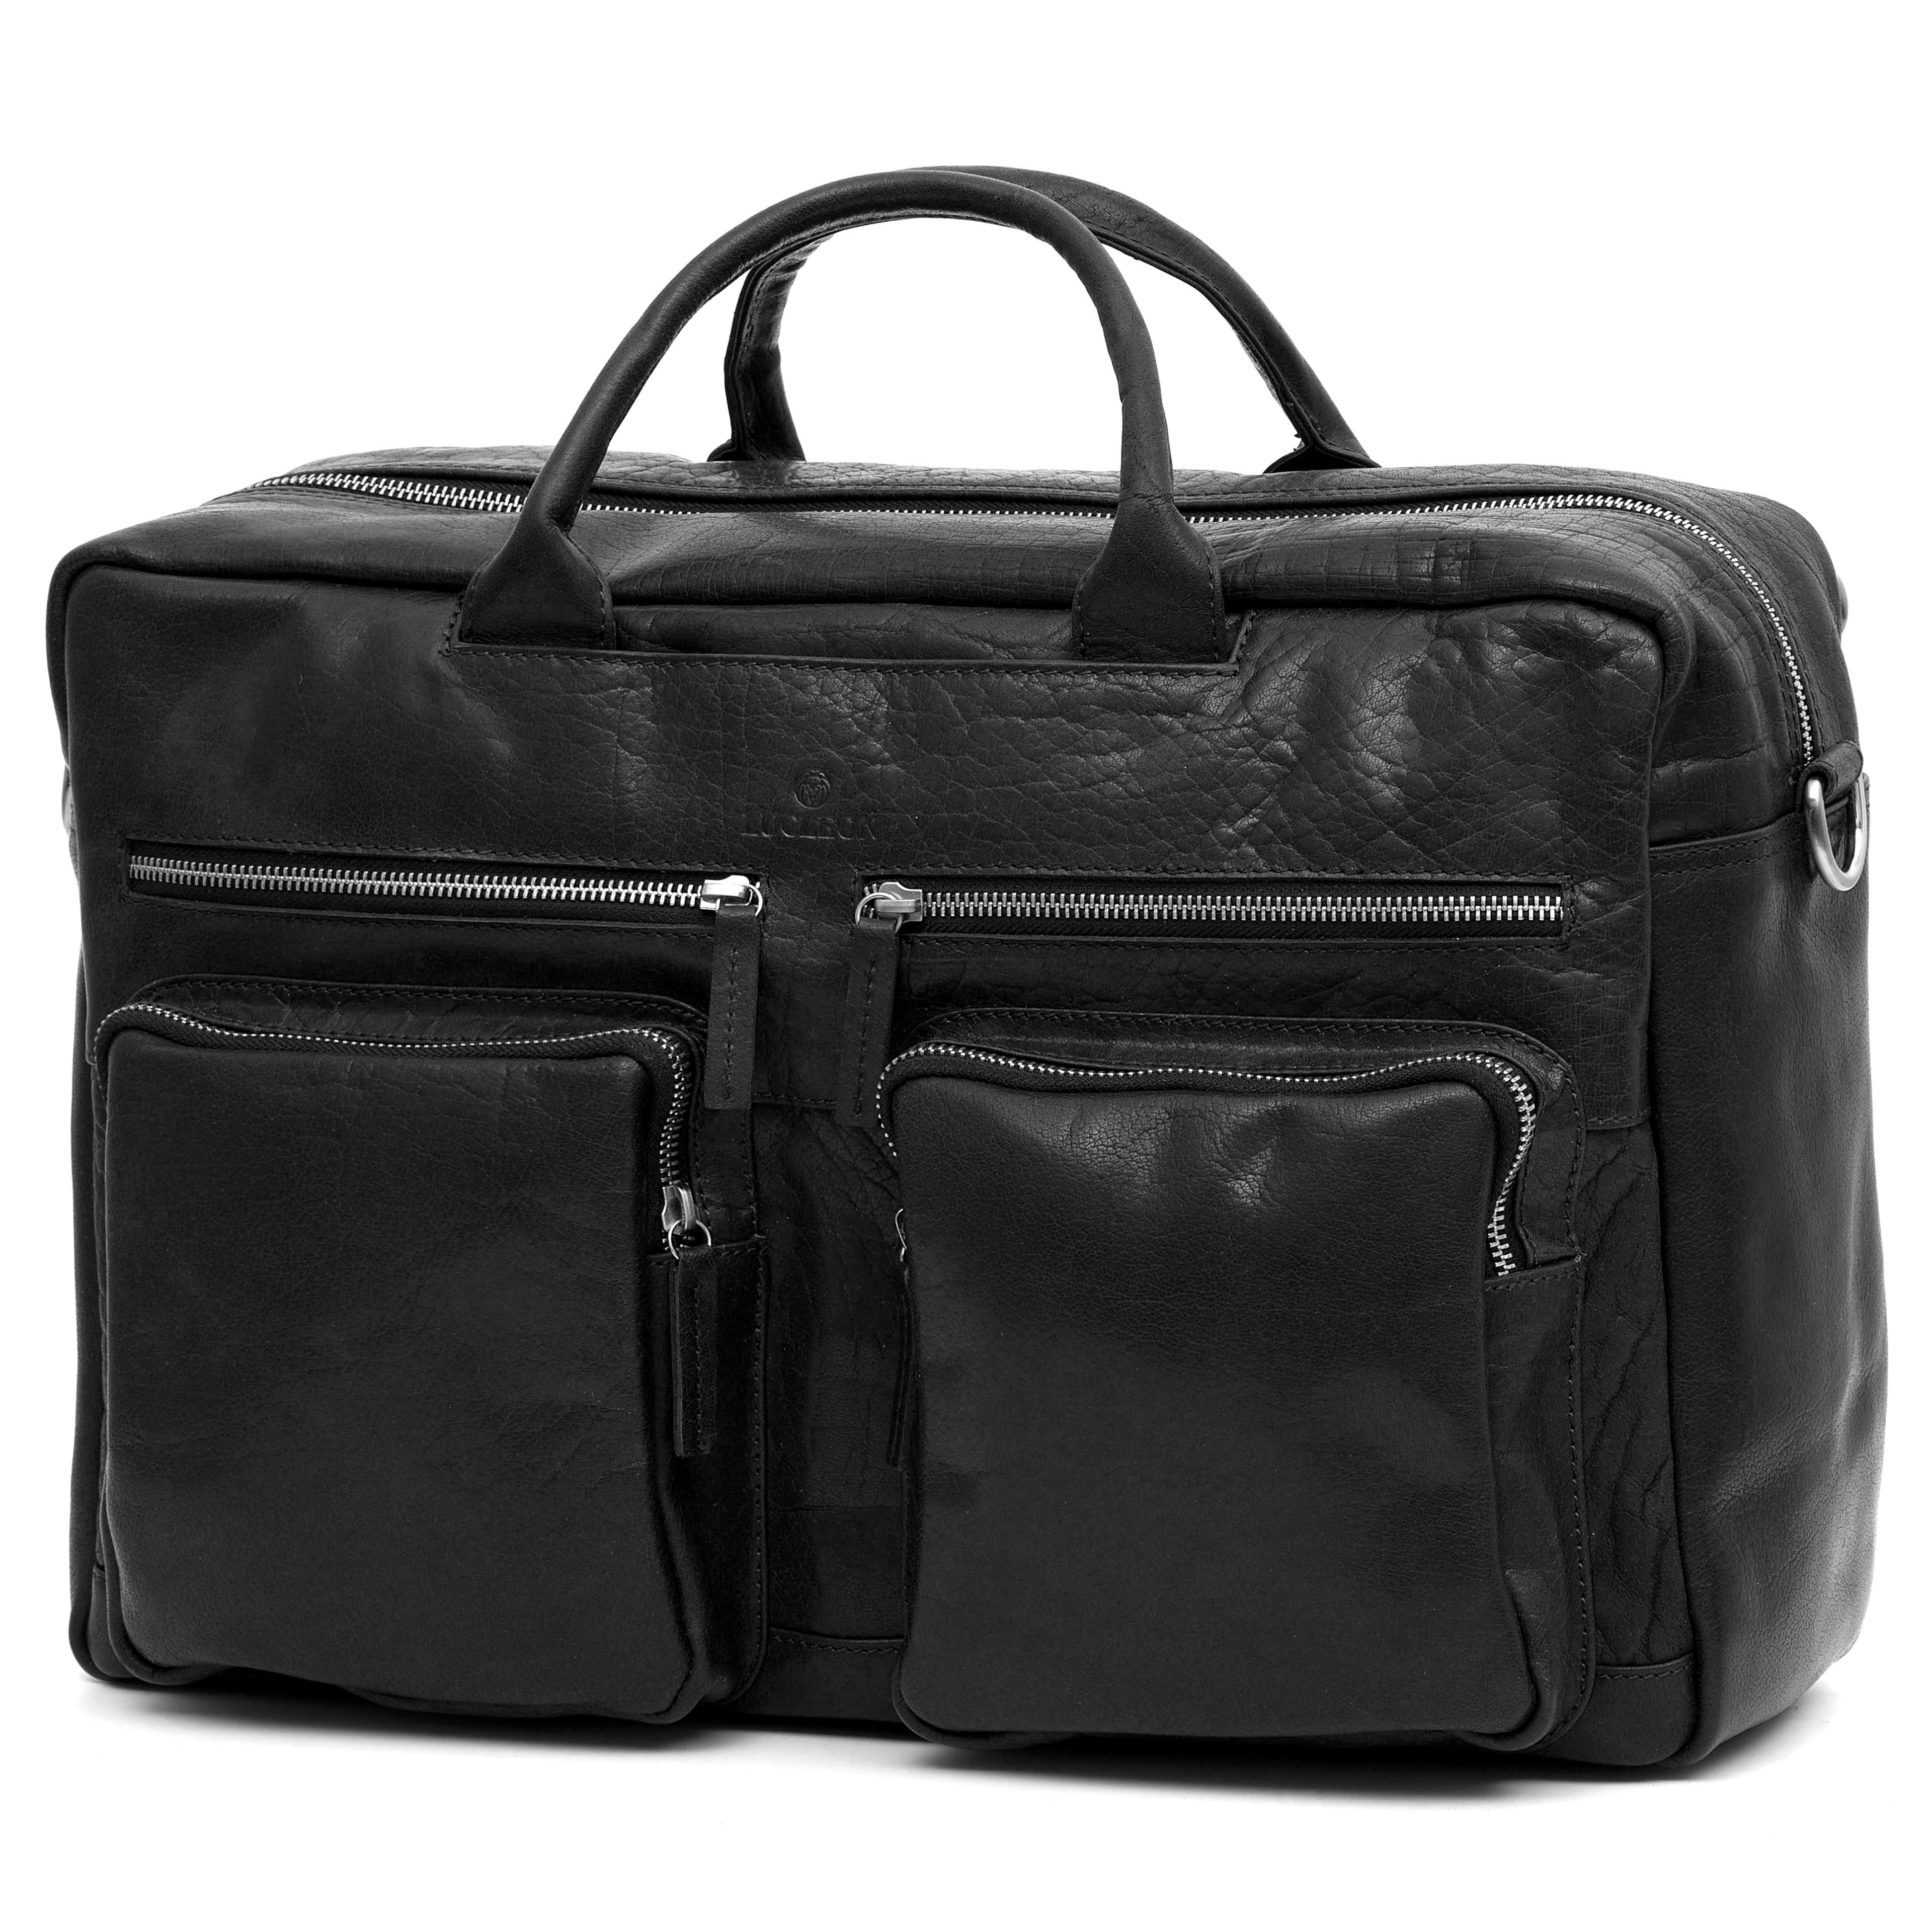 Montreal Combi Black Leather Travel Bag